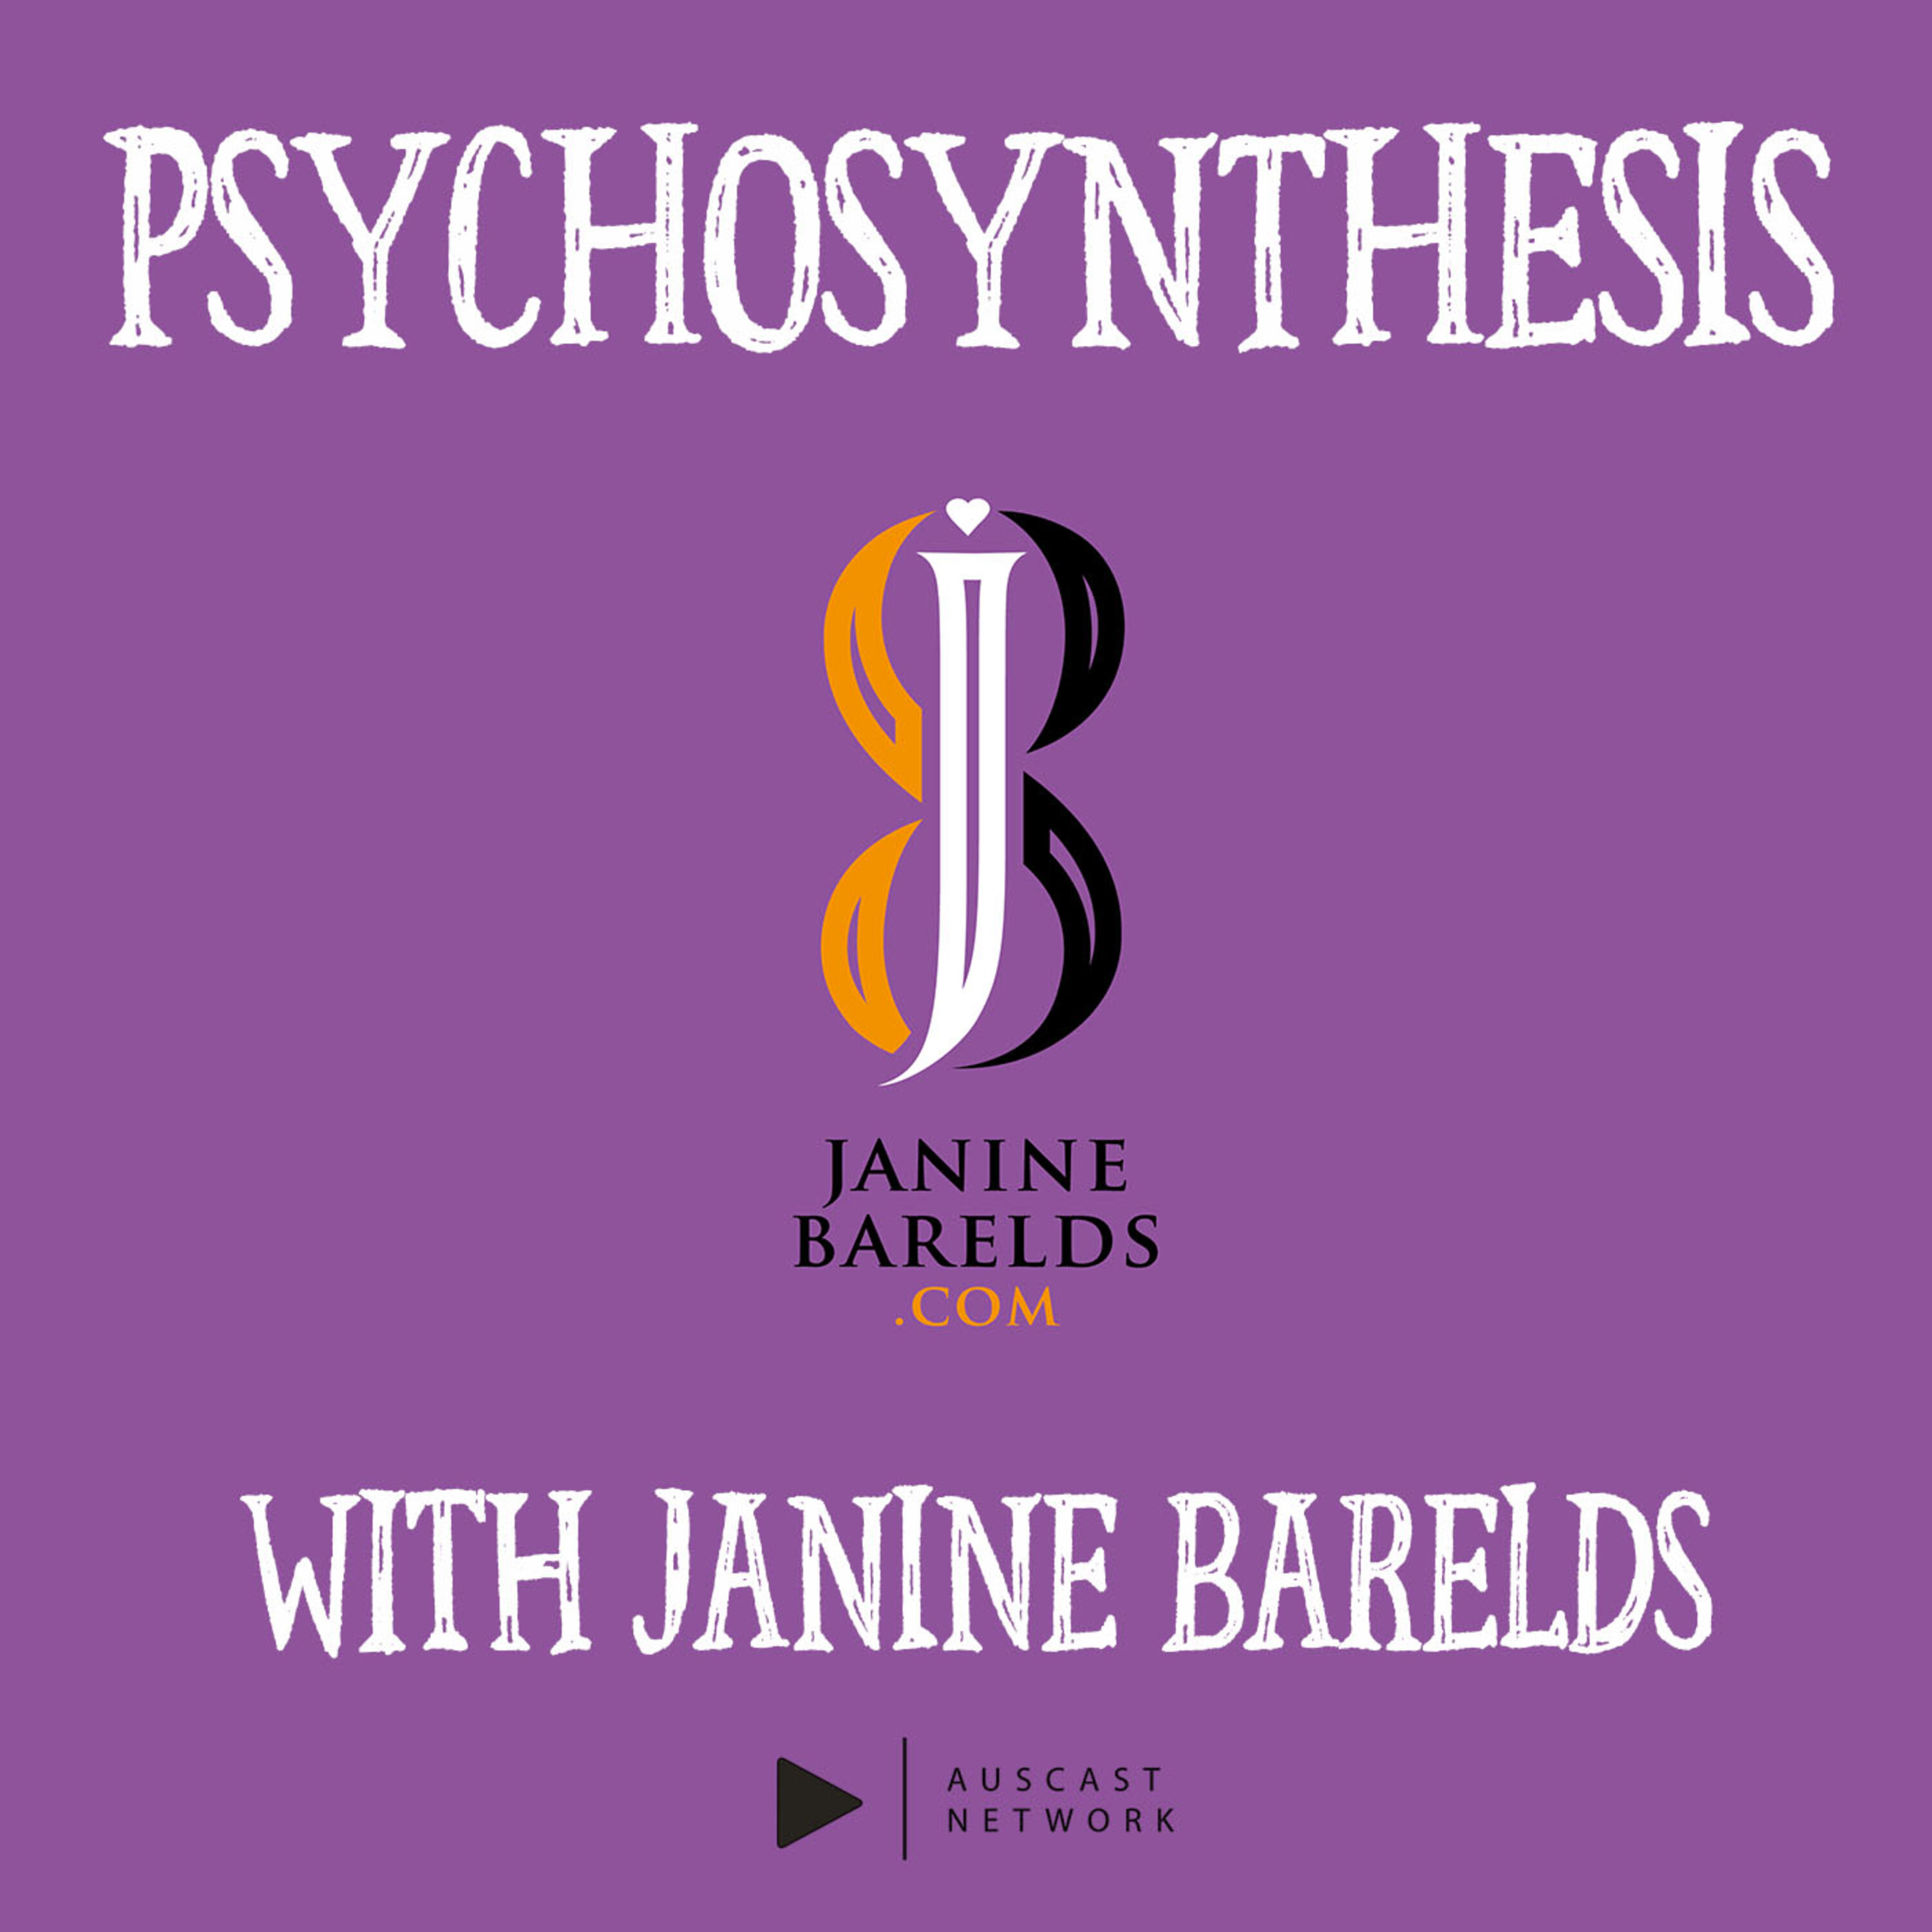 Psychosynthesis with Janine Barelds